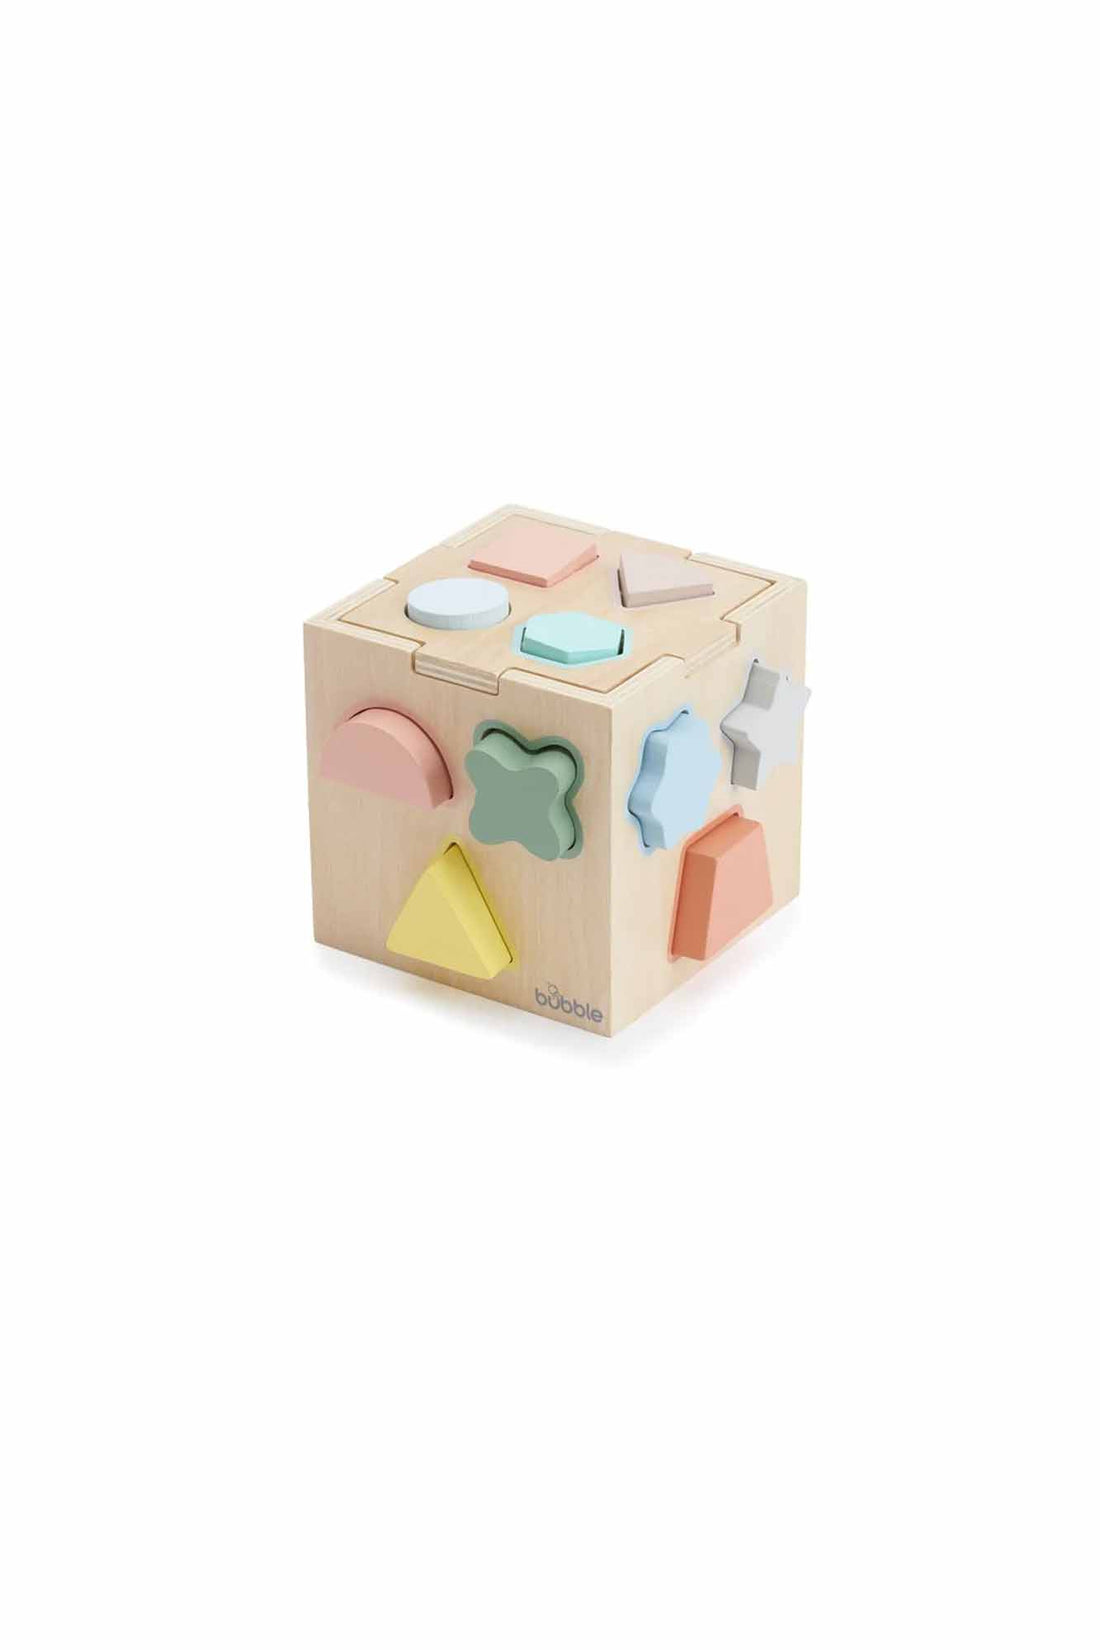 Bubble Wooden Shape Sorting Cube